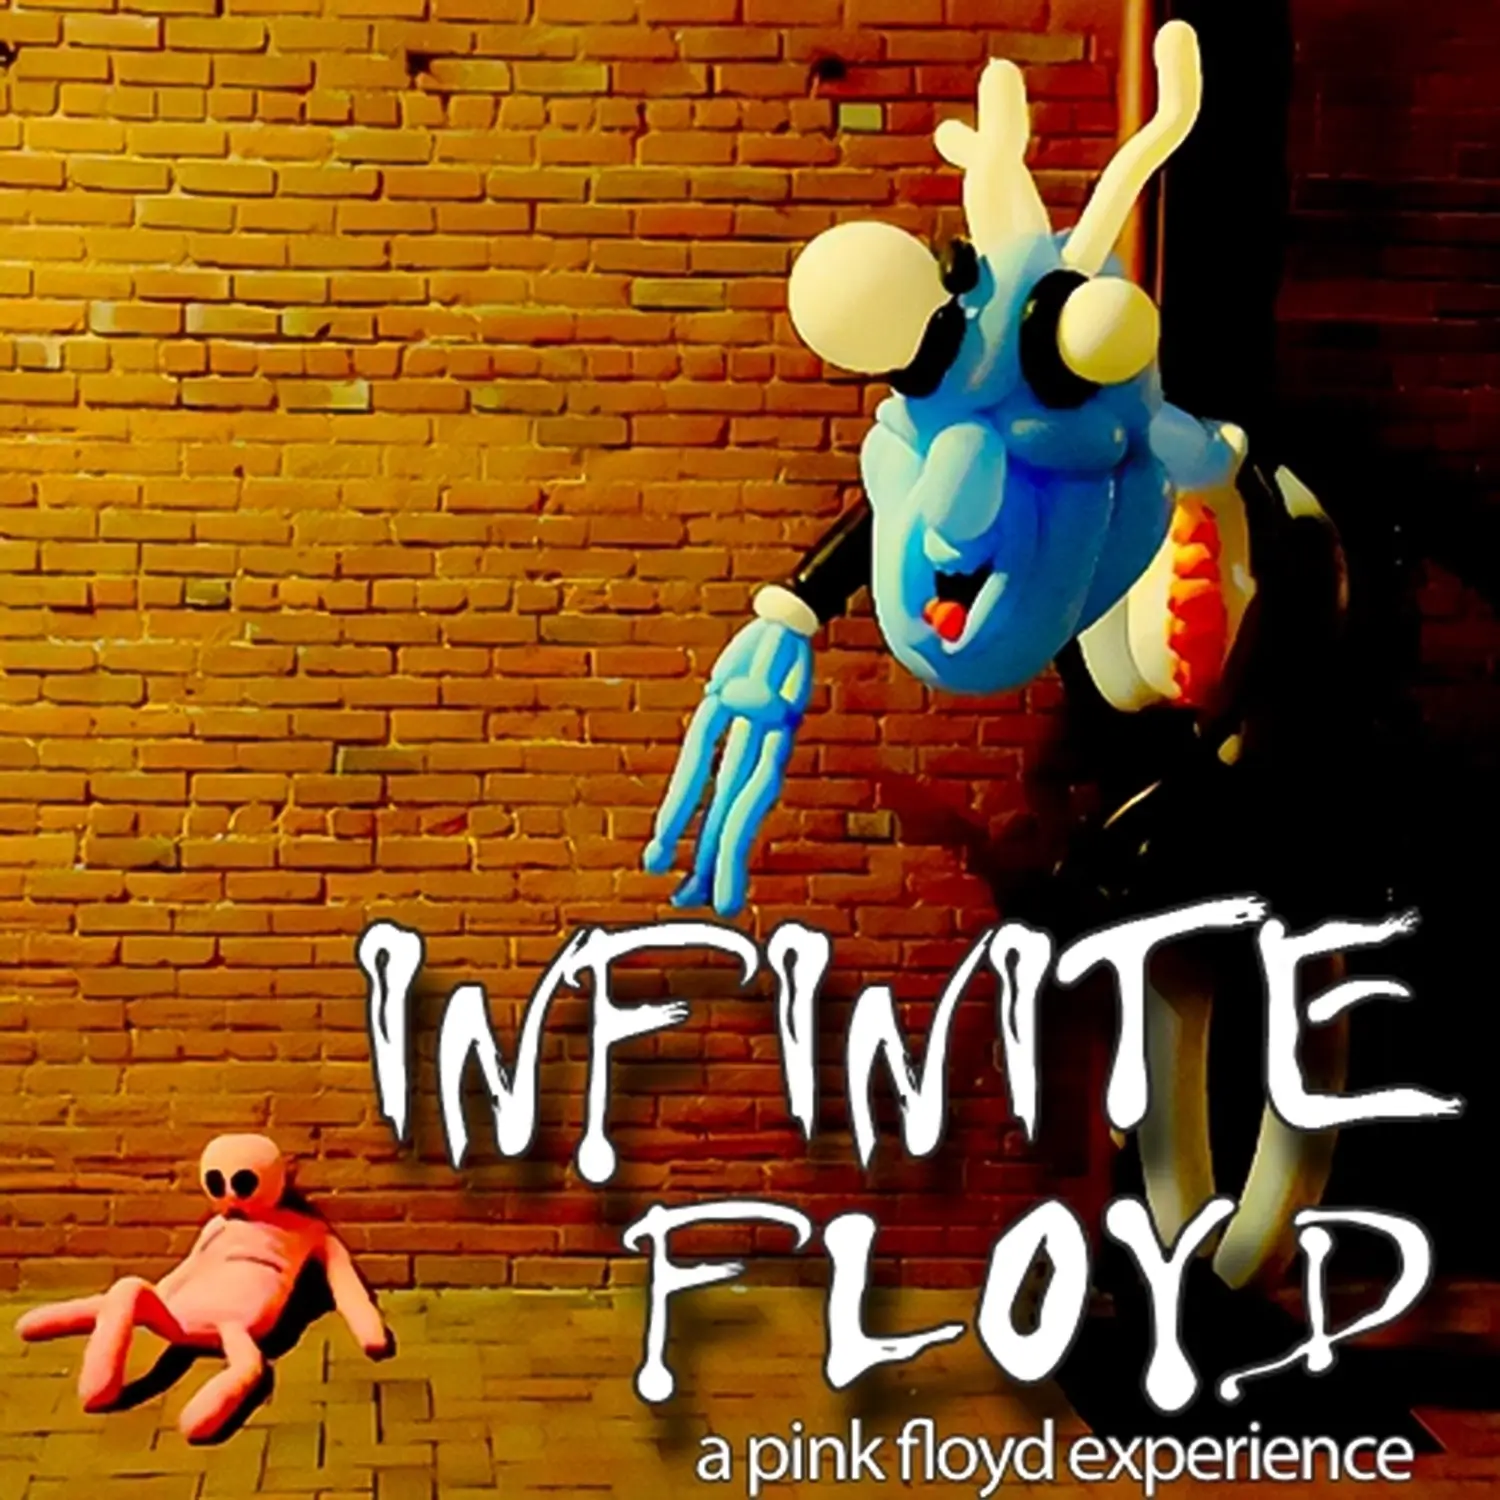 Infinite Floyd: a Pink Floyd Tribute Experience